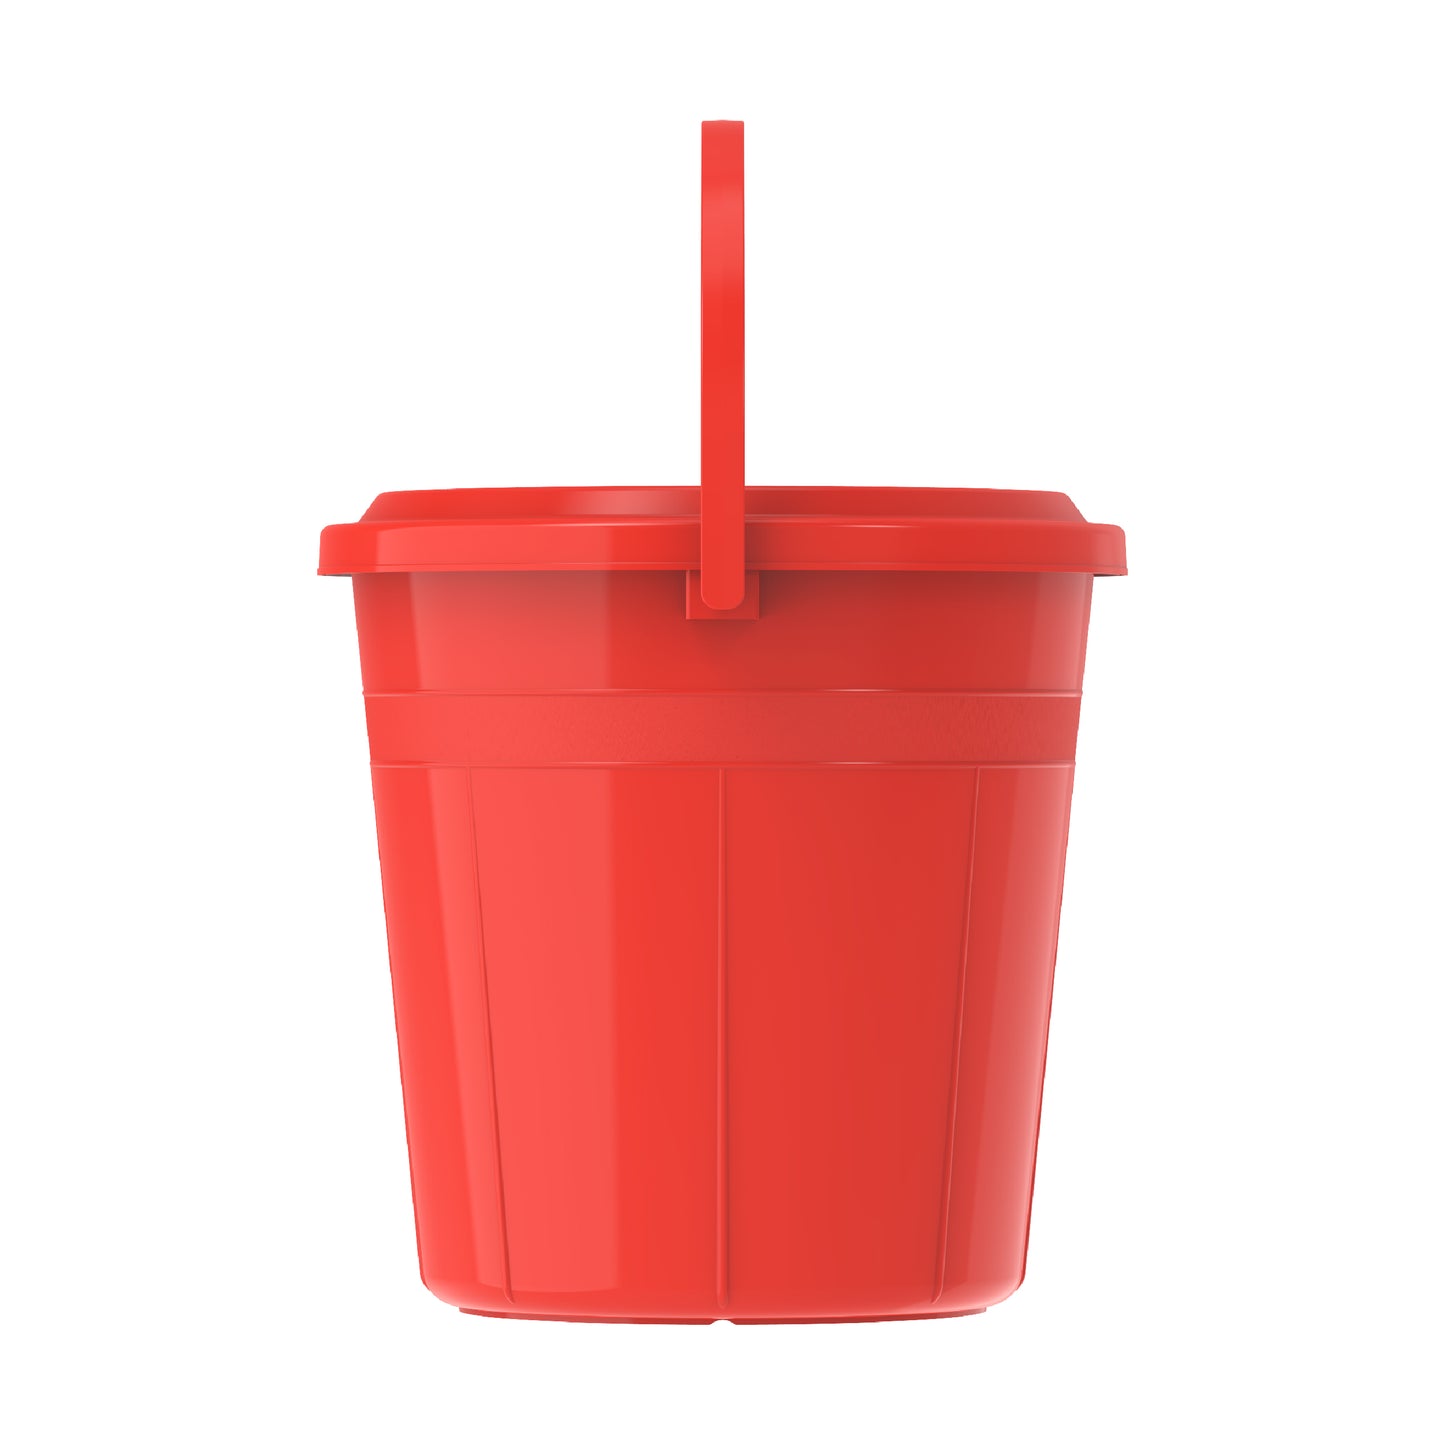  15L Plastic Bucket with Handle